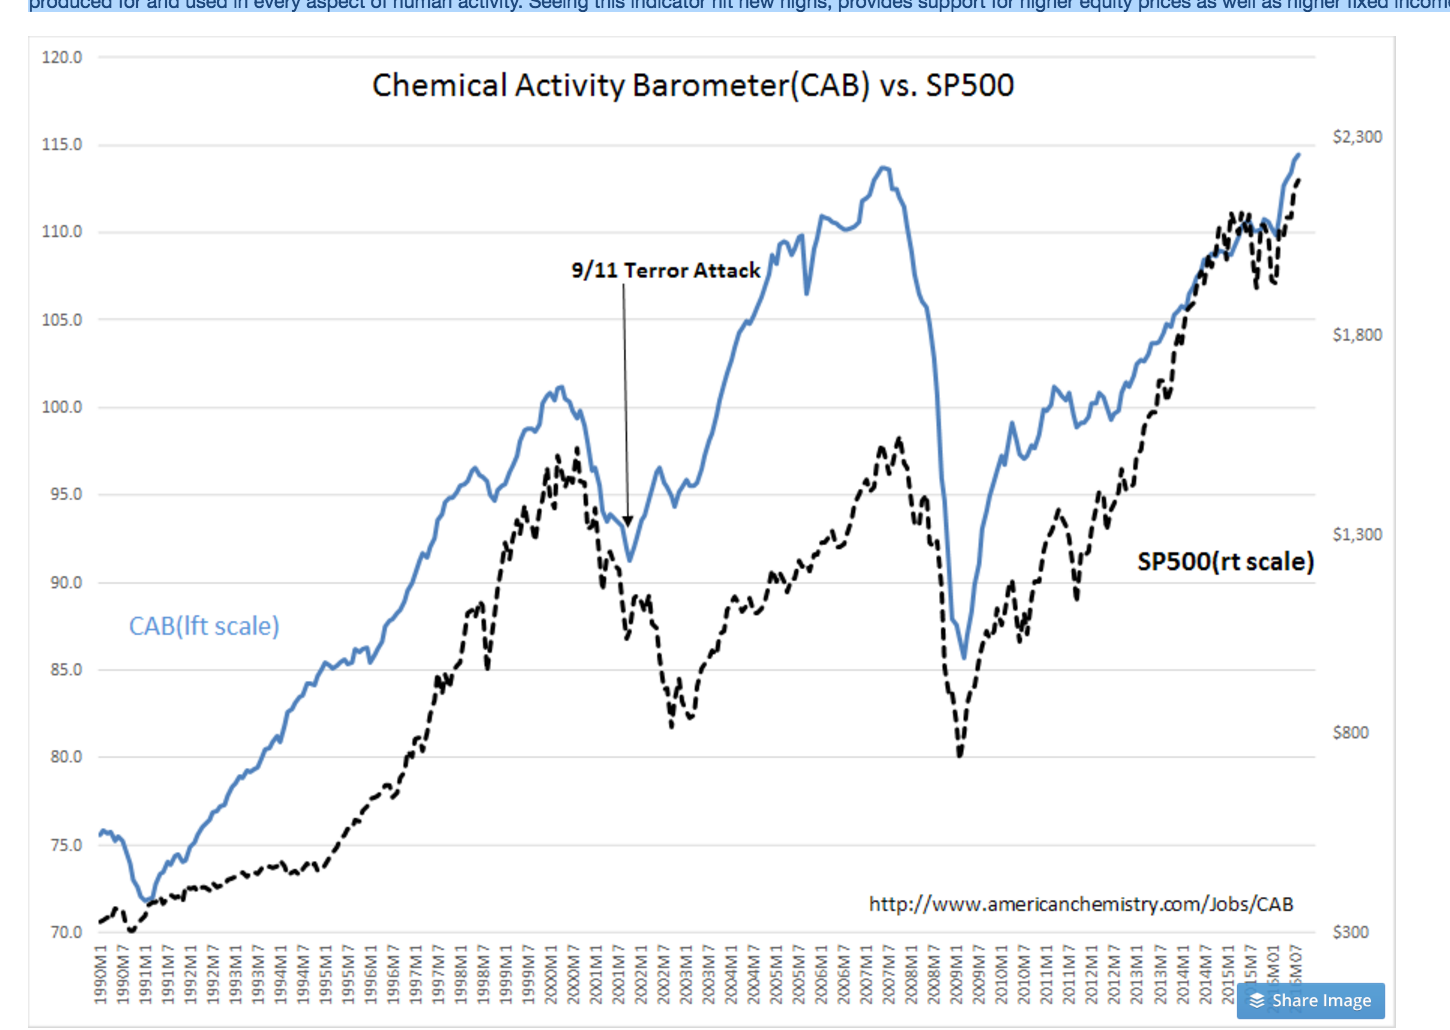 Chemical Activity Barometer CAB Vs SP500